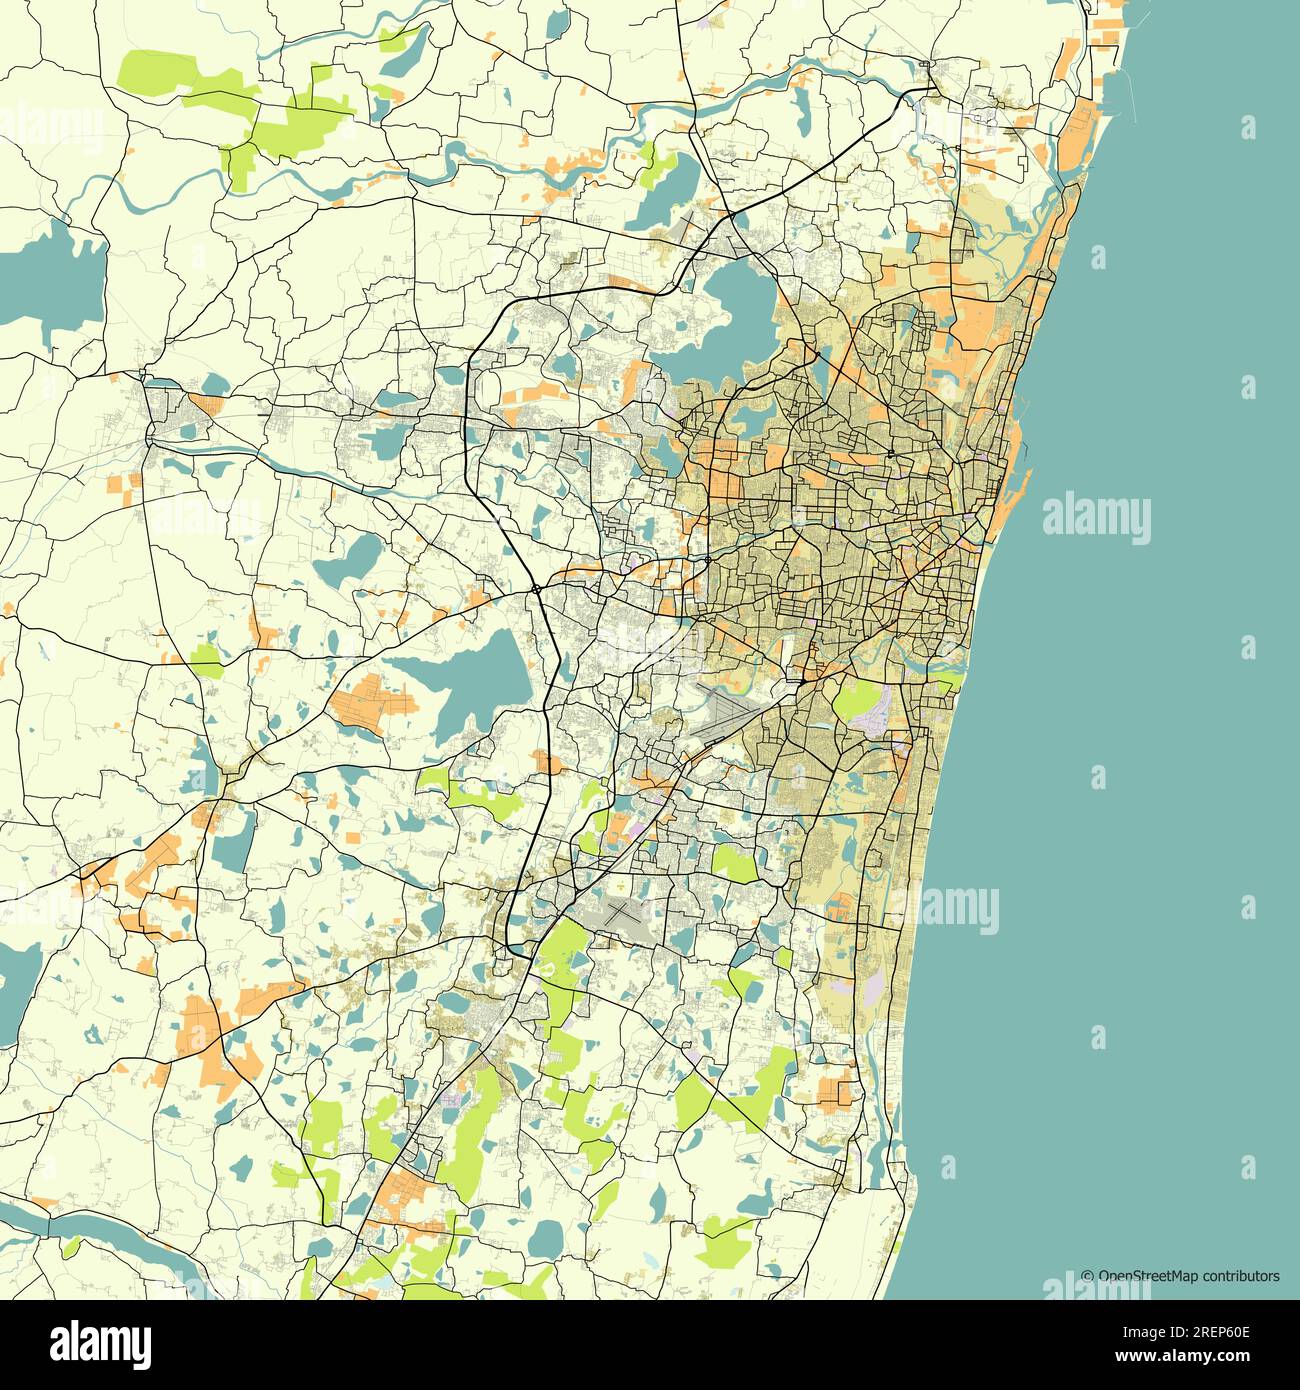 Vector city map of Chennai, Tamil Nadu, India Stock Vector